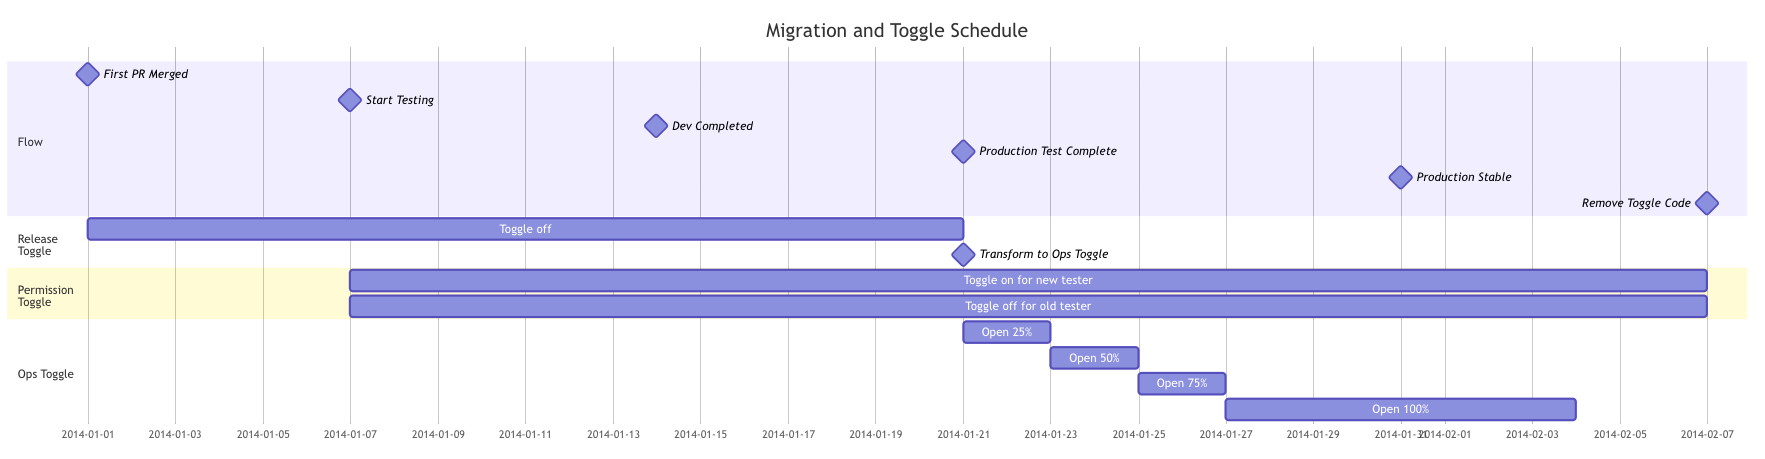 migration_schedule_twzh.png